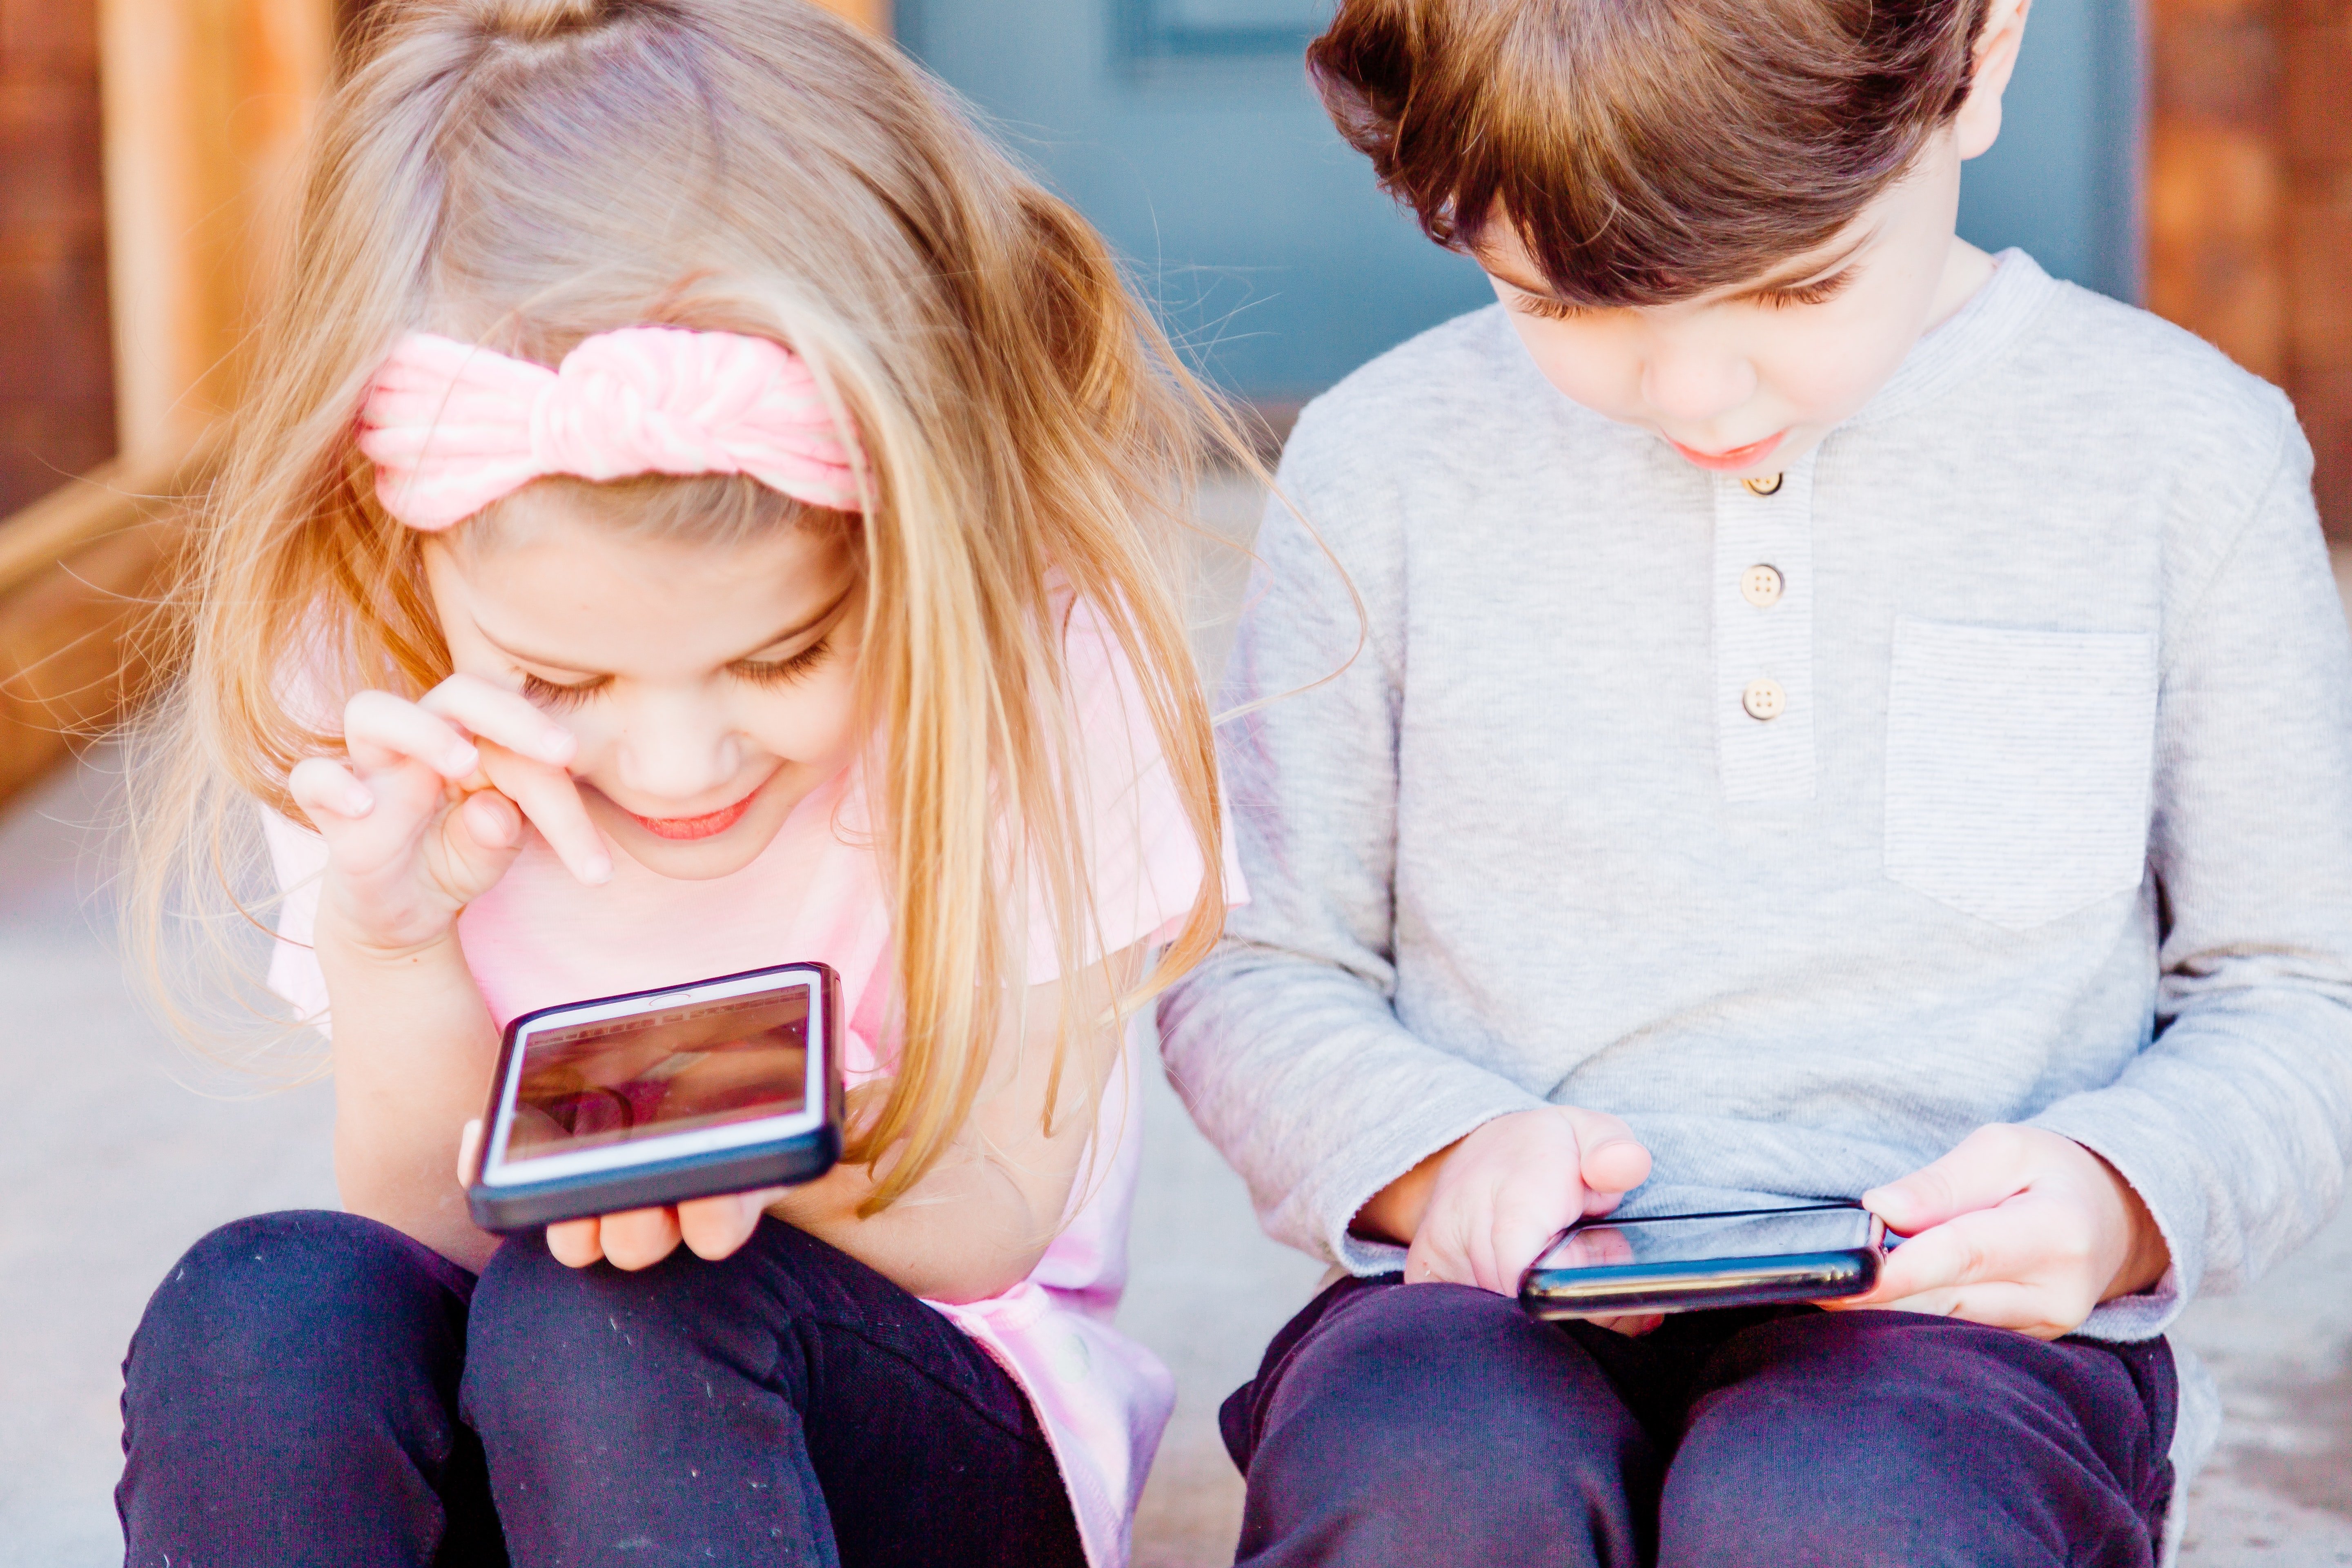 Kids using smartphones | Source: Unsplash